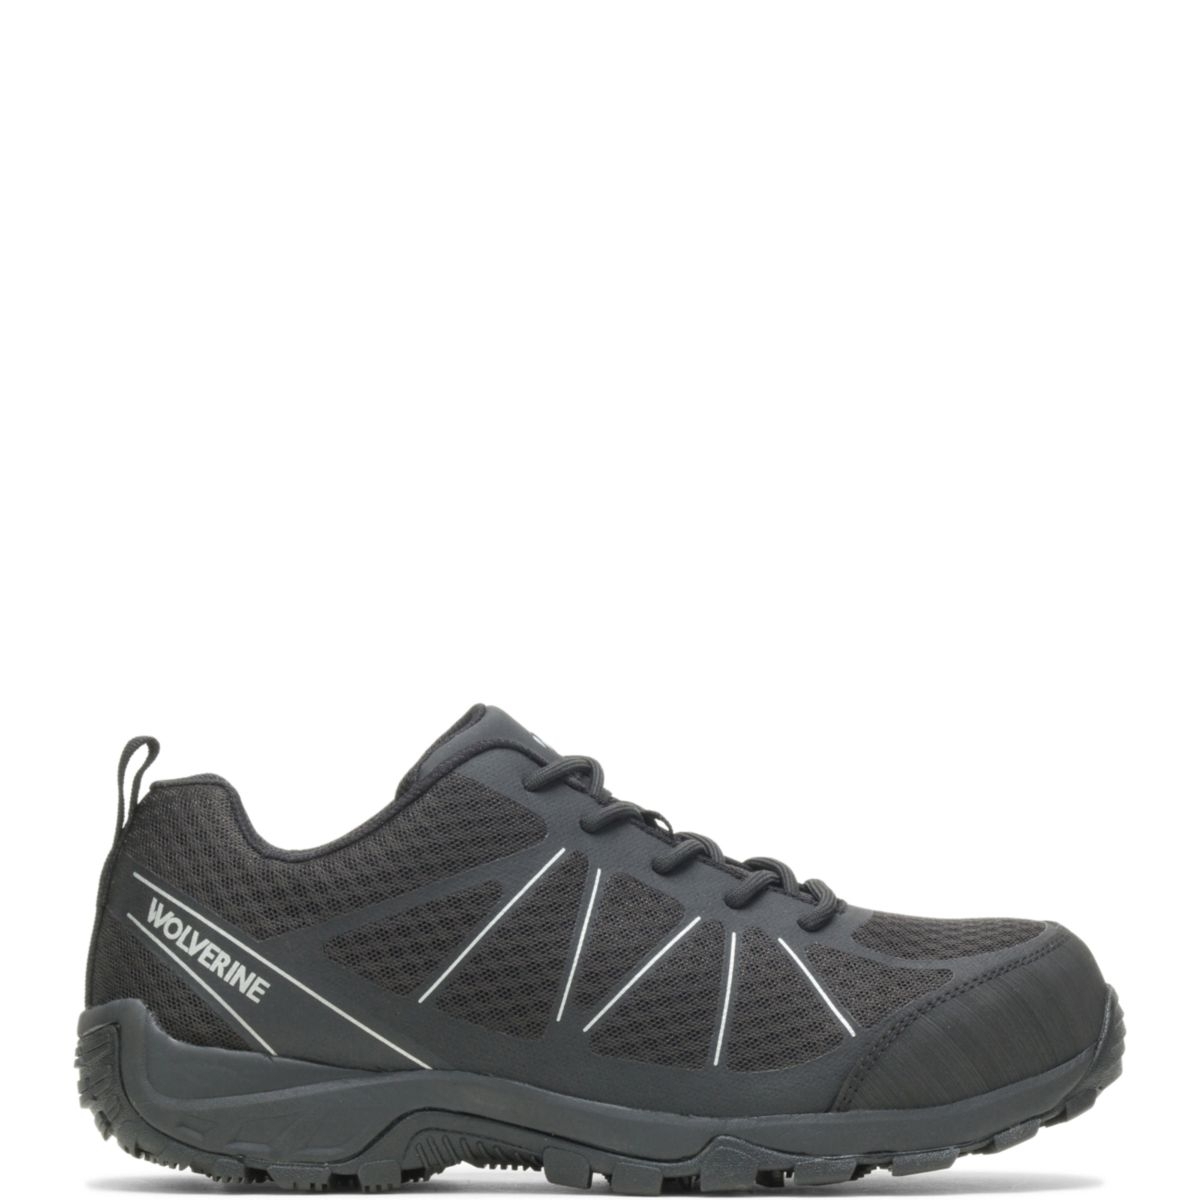 WOLVERINE Men's Amherst II CarbonMAXÂ® Composite Toe Work Shoe Black - W201147 BLACK - BLACK, 11.5 X-Wide